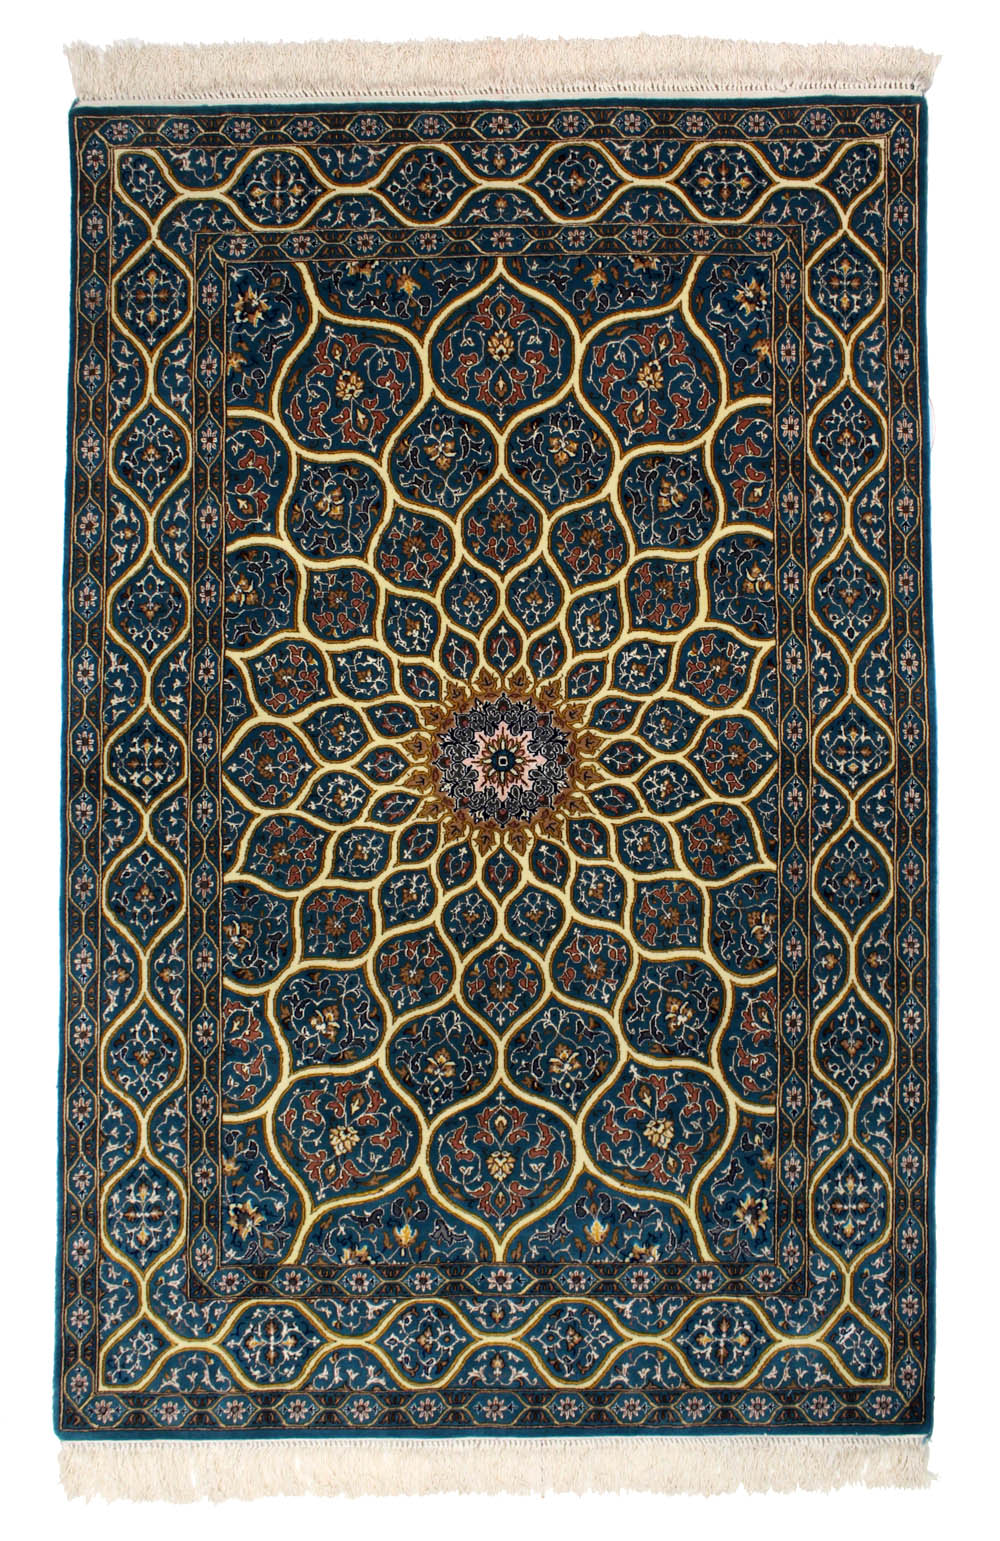 WEDS-70　イスファハン産ペルシャ絨毯　172×113cm　